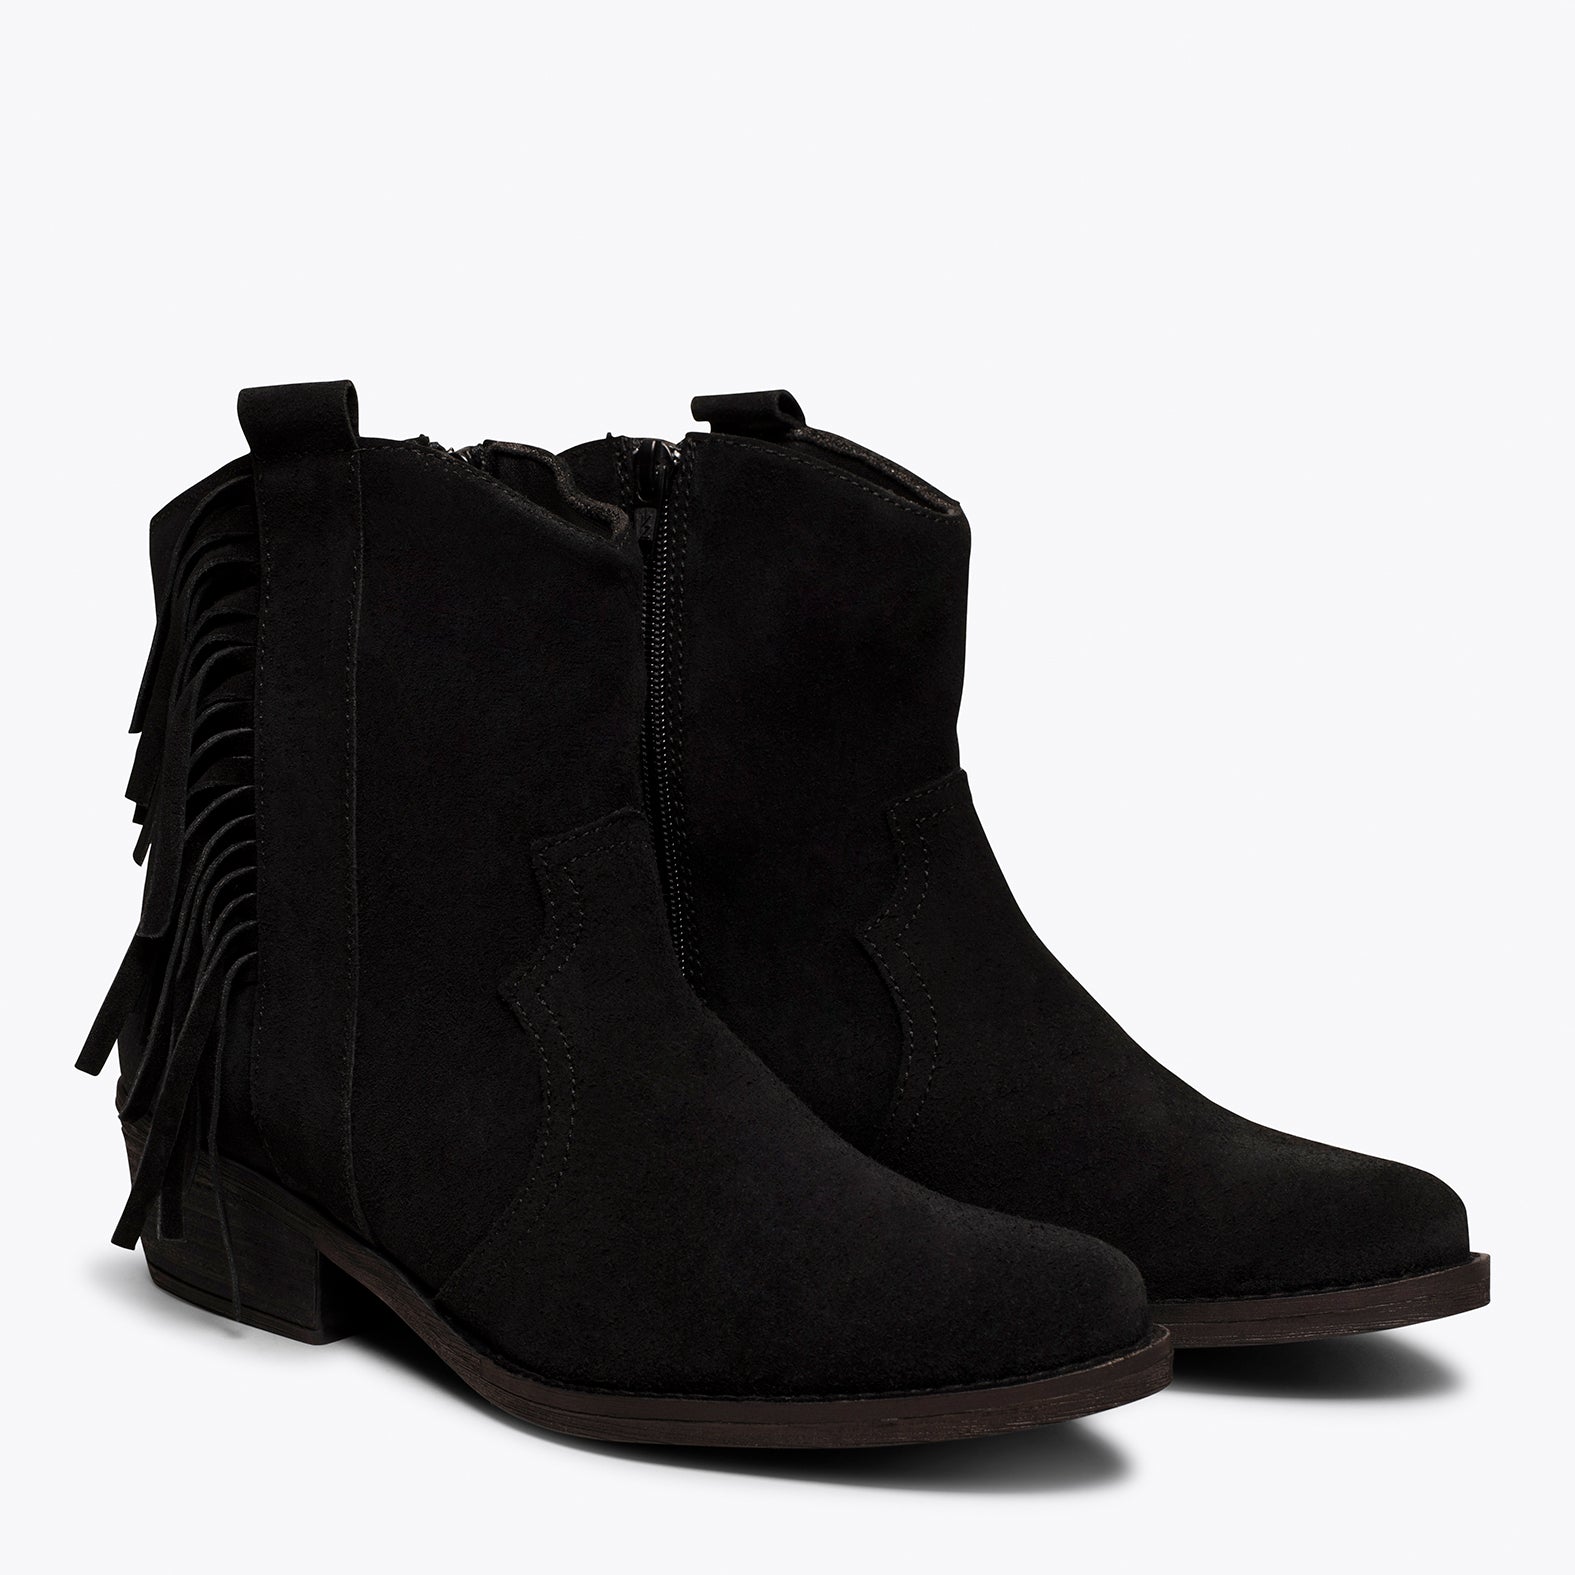 BOHO – BLACK low heel bootie with fringes